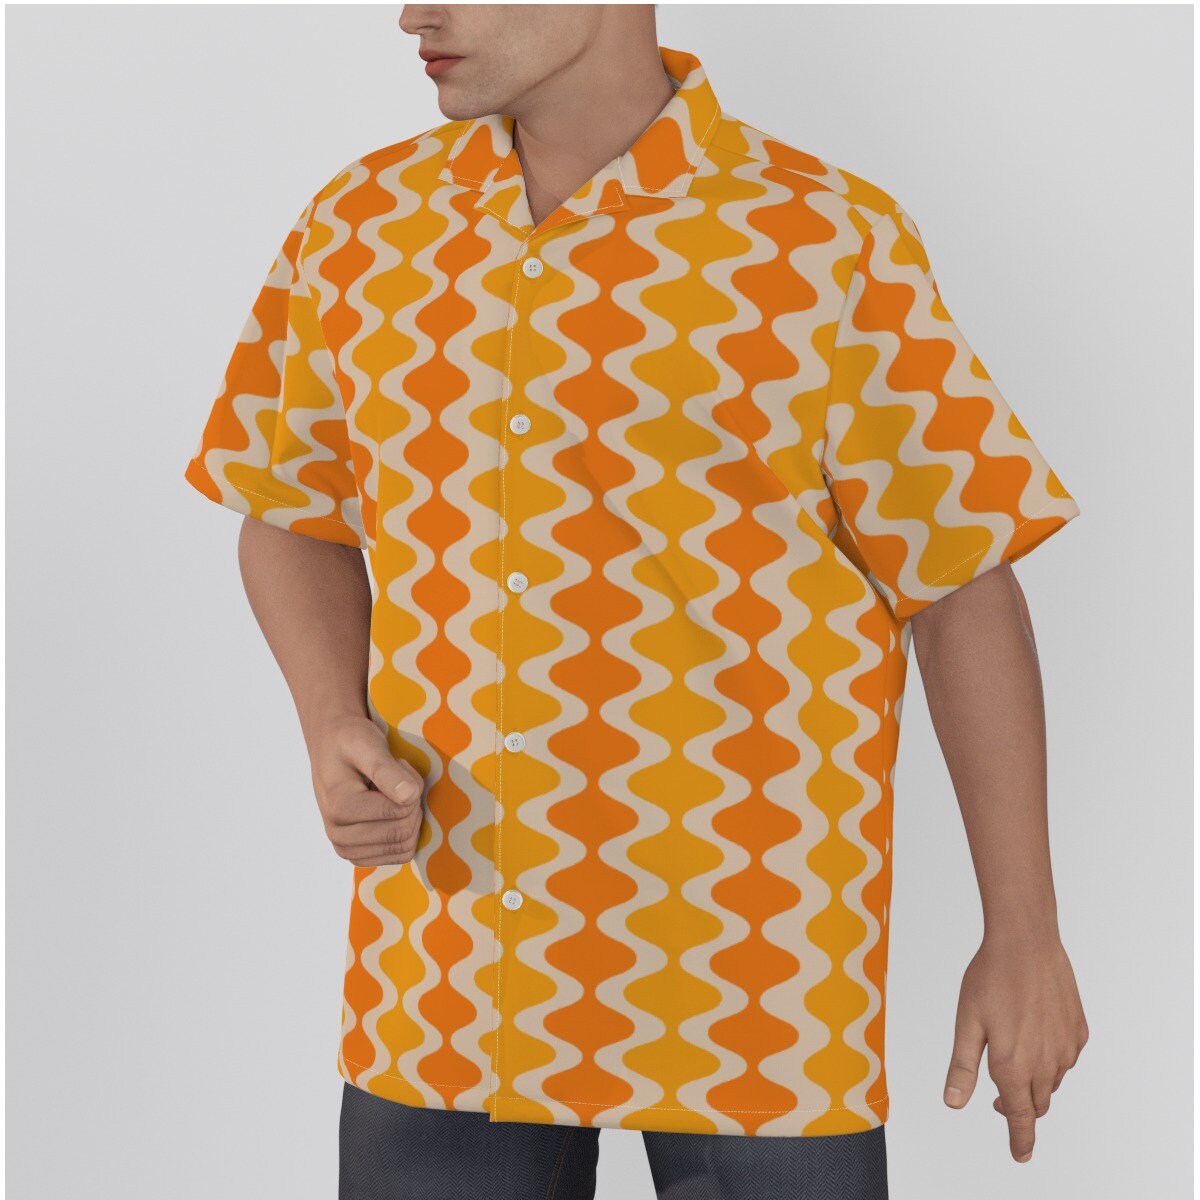 Retro Shirt Men, Retro Top, Mid Century Style Top, 60s 70s style shirt, Vintage Style Top, Yellow Orange Shirt, Hawaiian Shirt, Dress Shirt